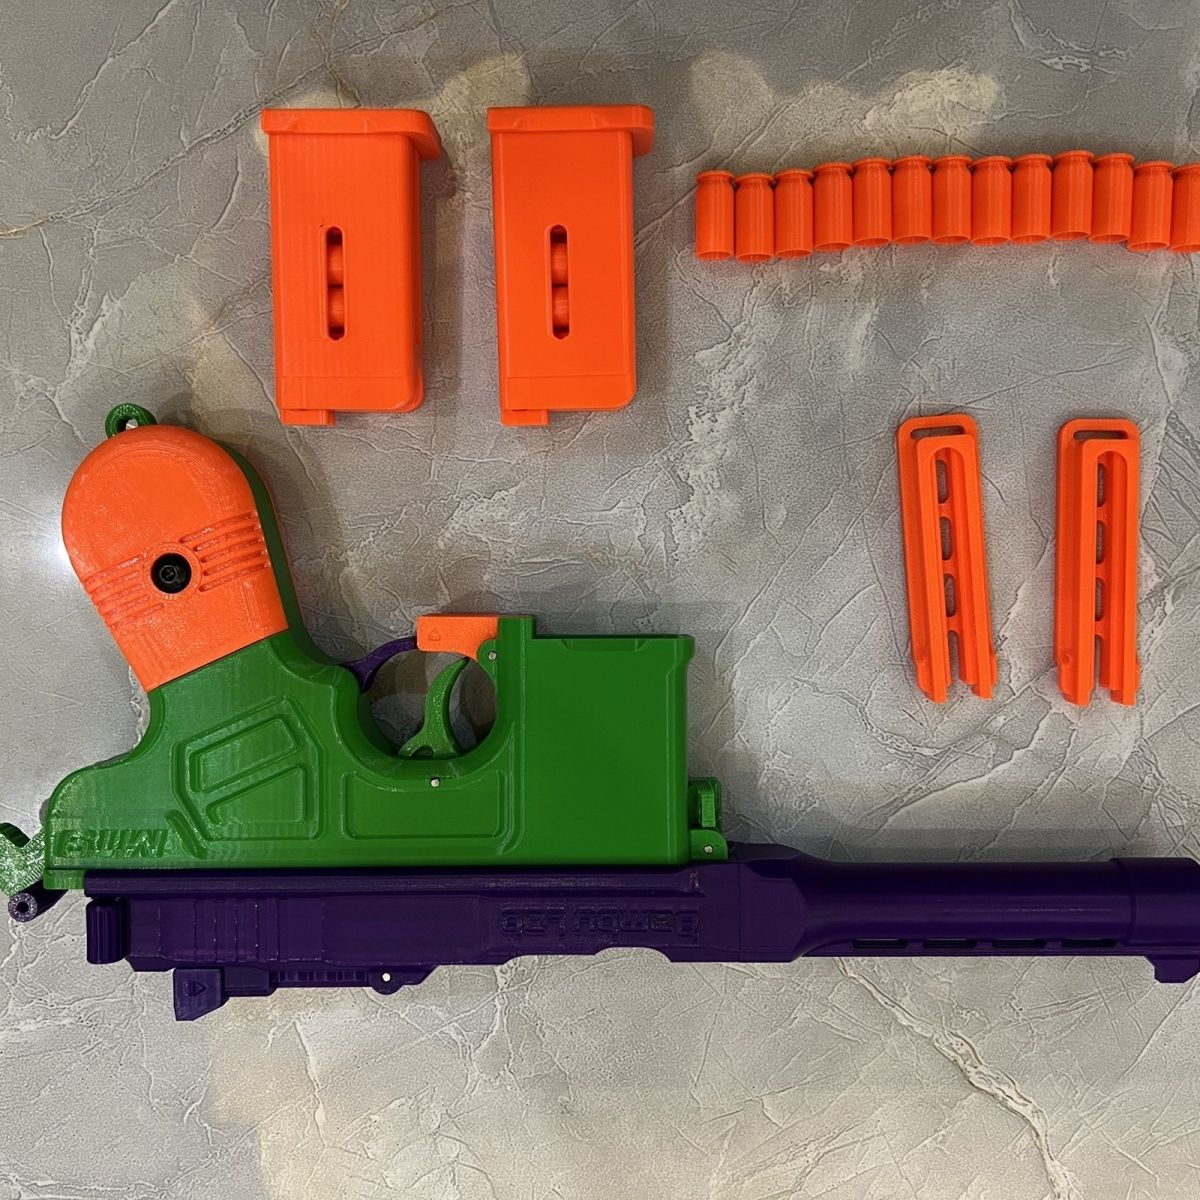 3D Printed Mauser C96 Toy Gun